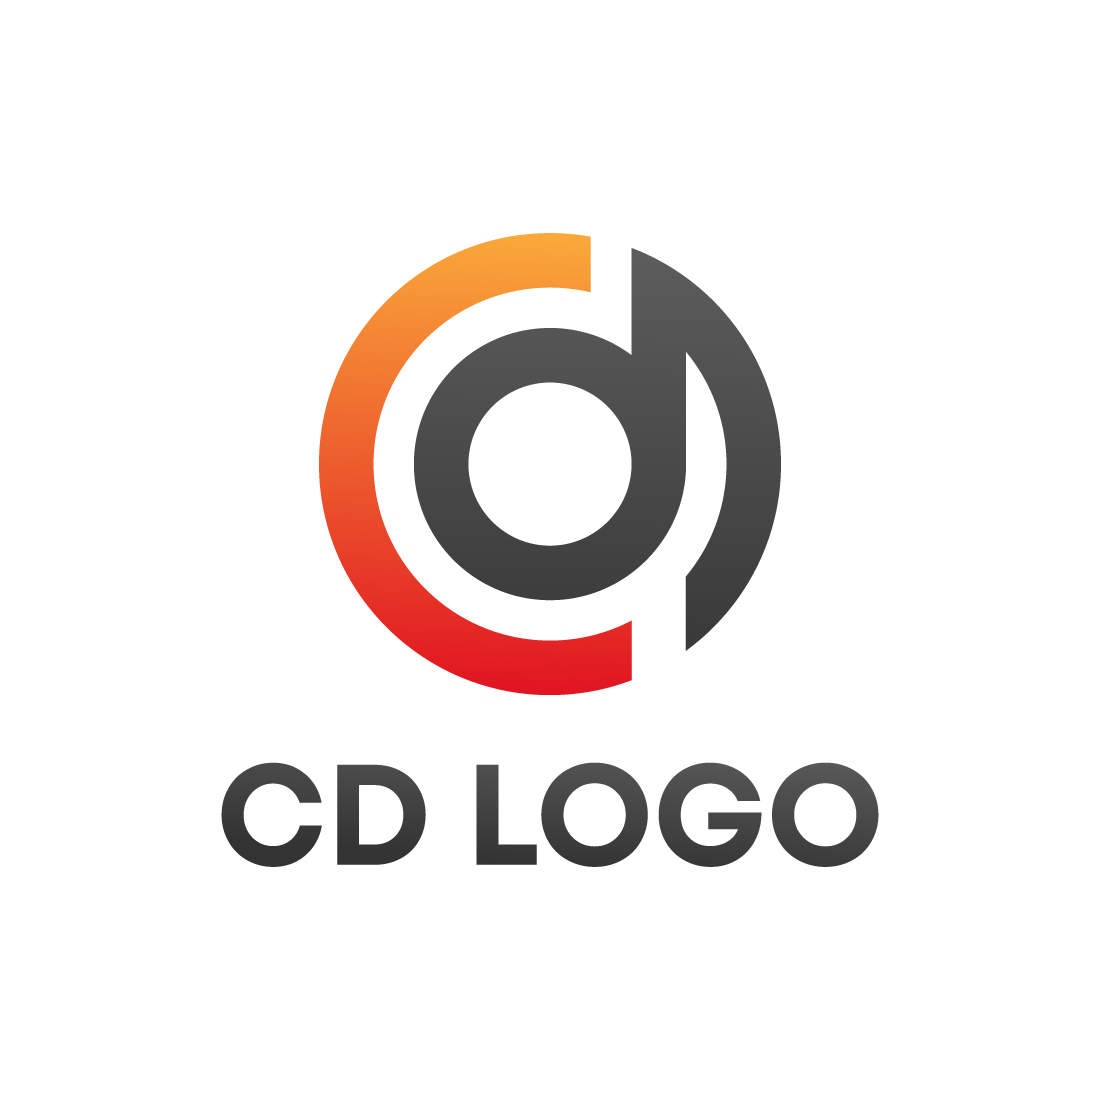 CD LOGO DESIGN preview image.